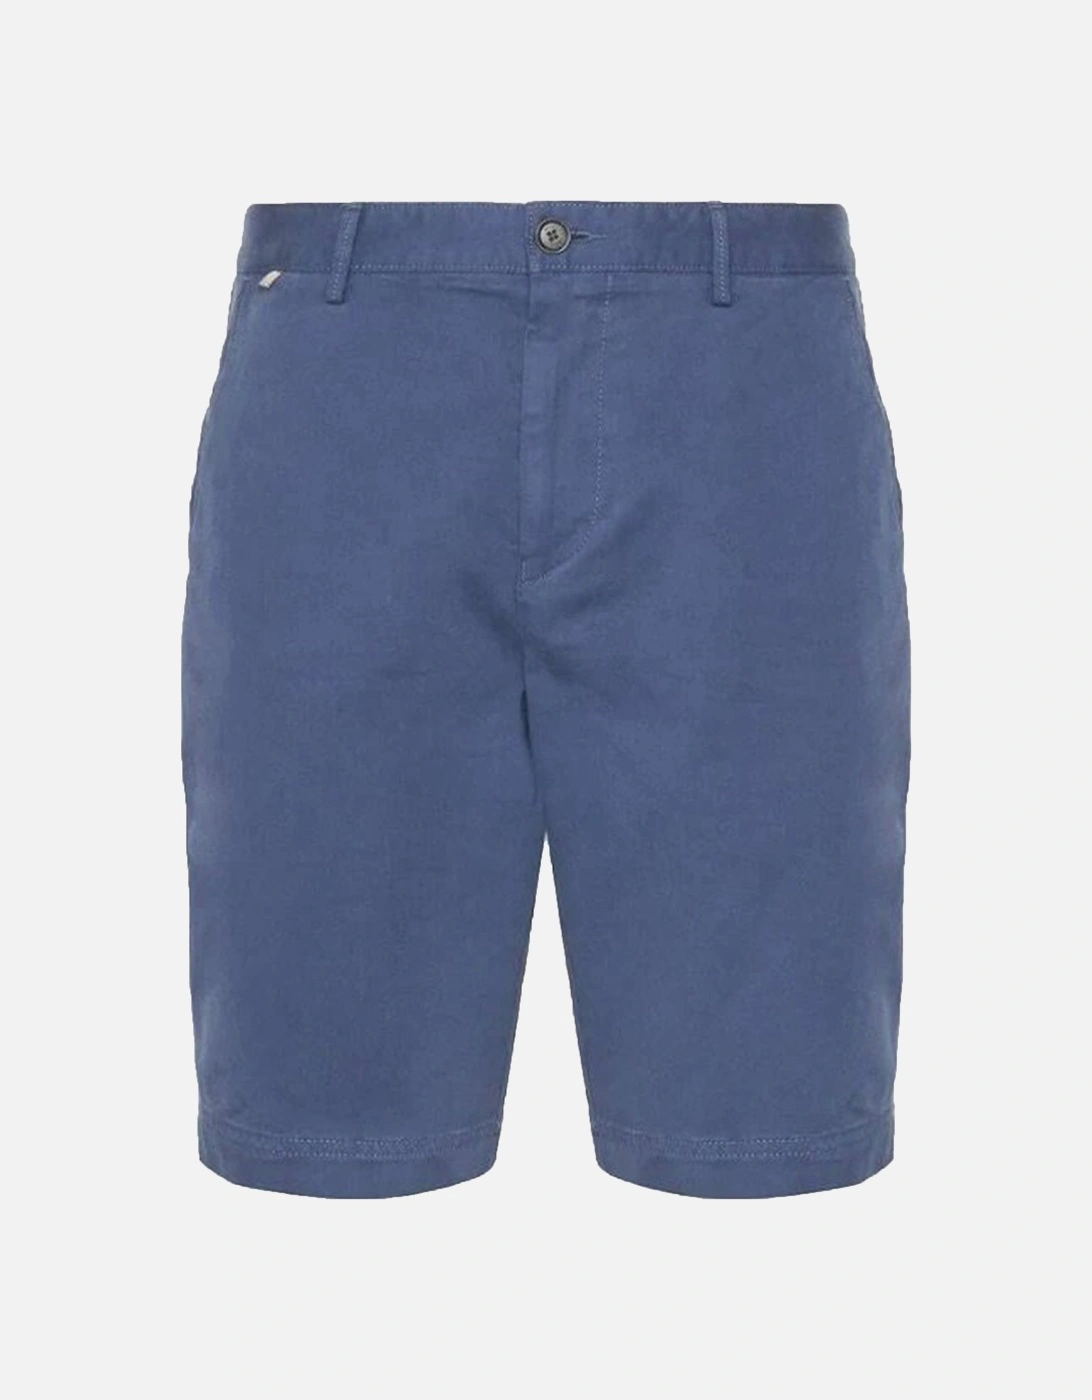 Men's Boss Trouser Shorts Blue - Size: 38/39/32 product